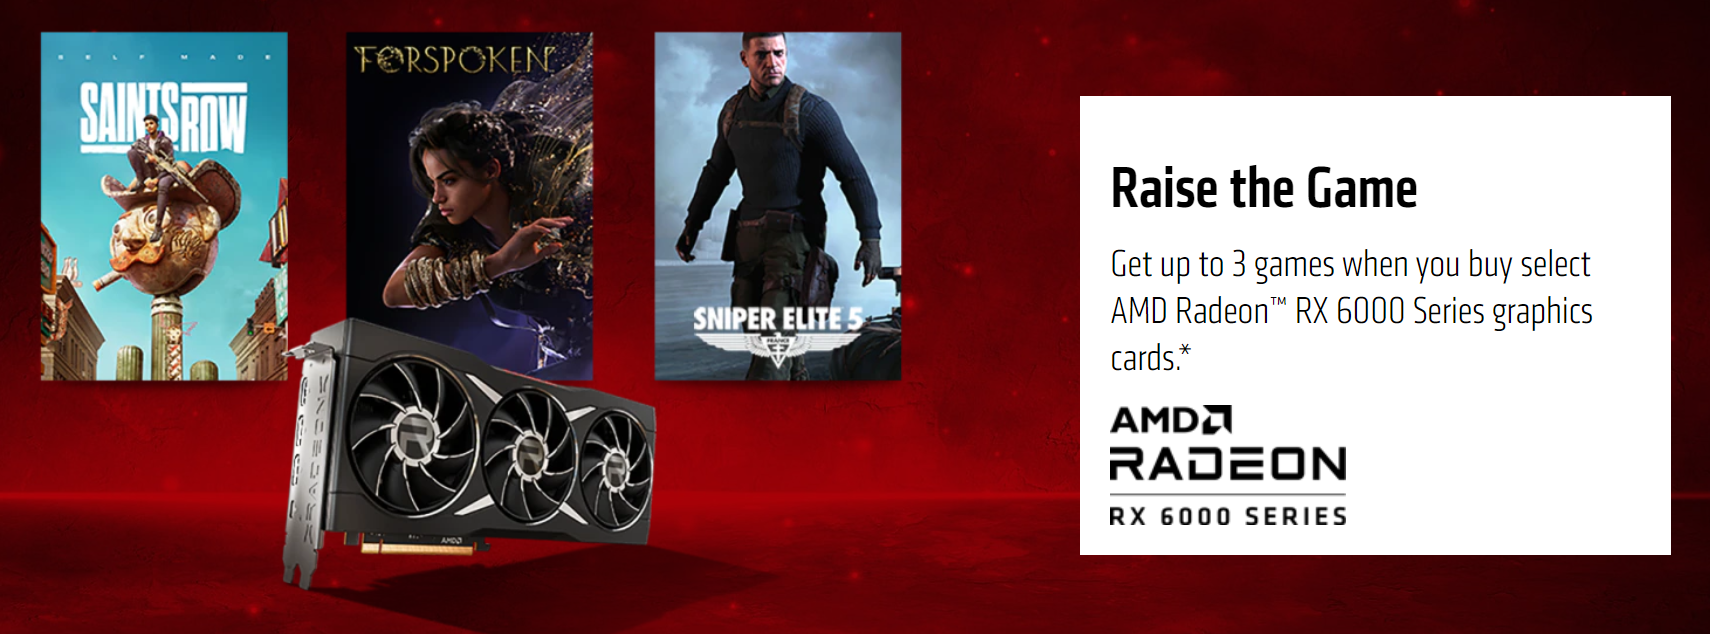 AMD_Bundle_ Raise the Game_Radeon RX 6000 Series